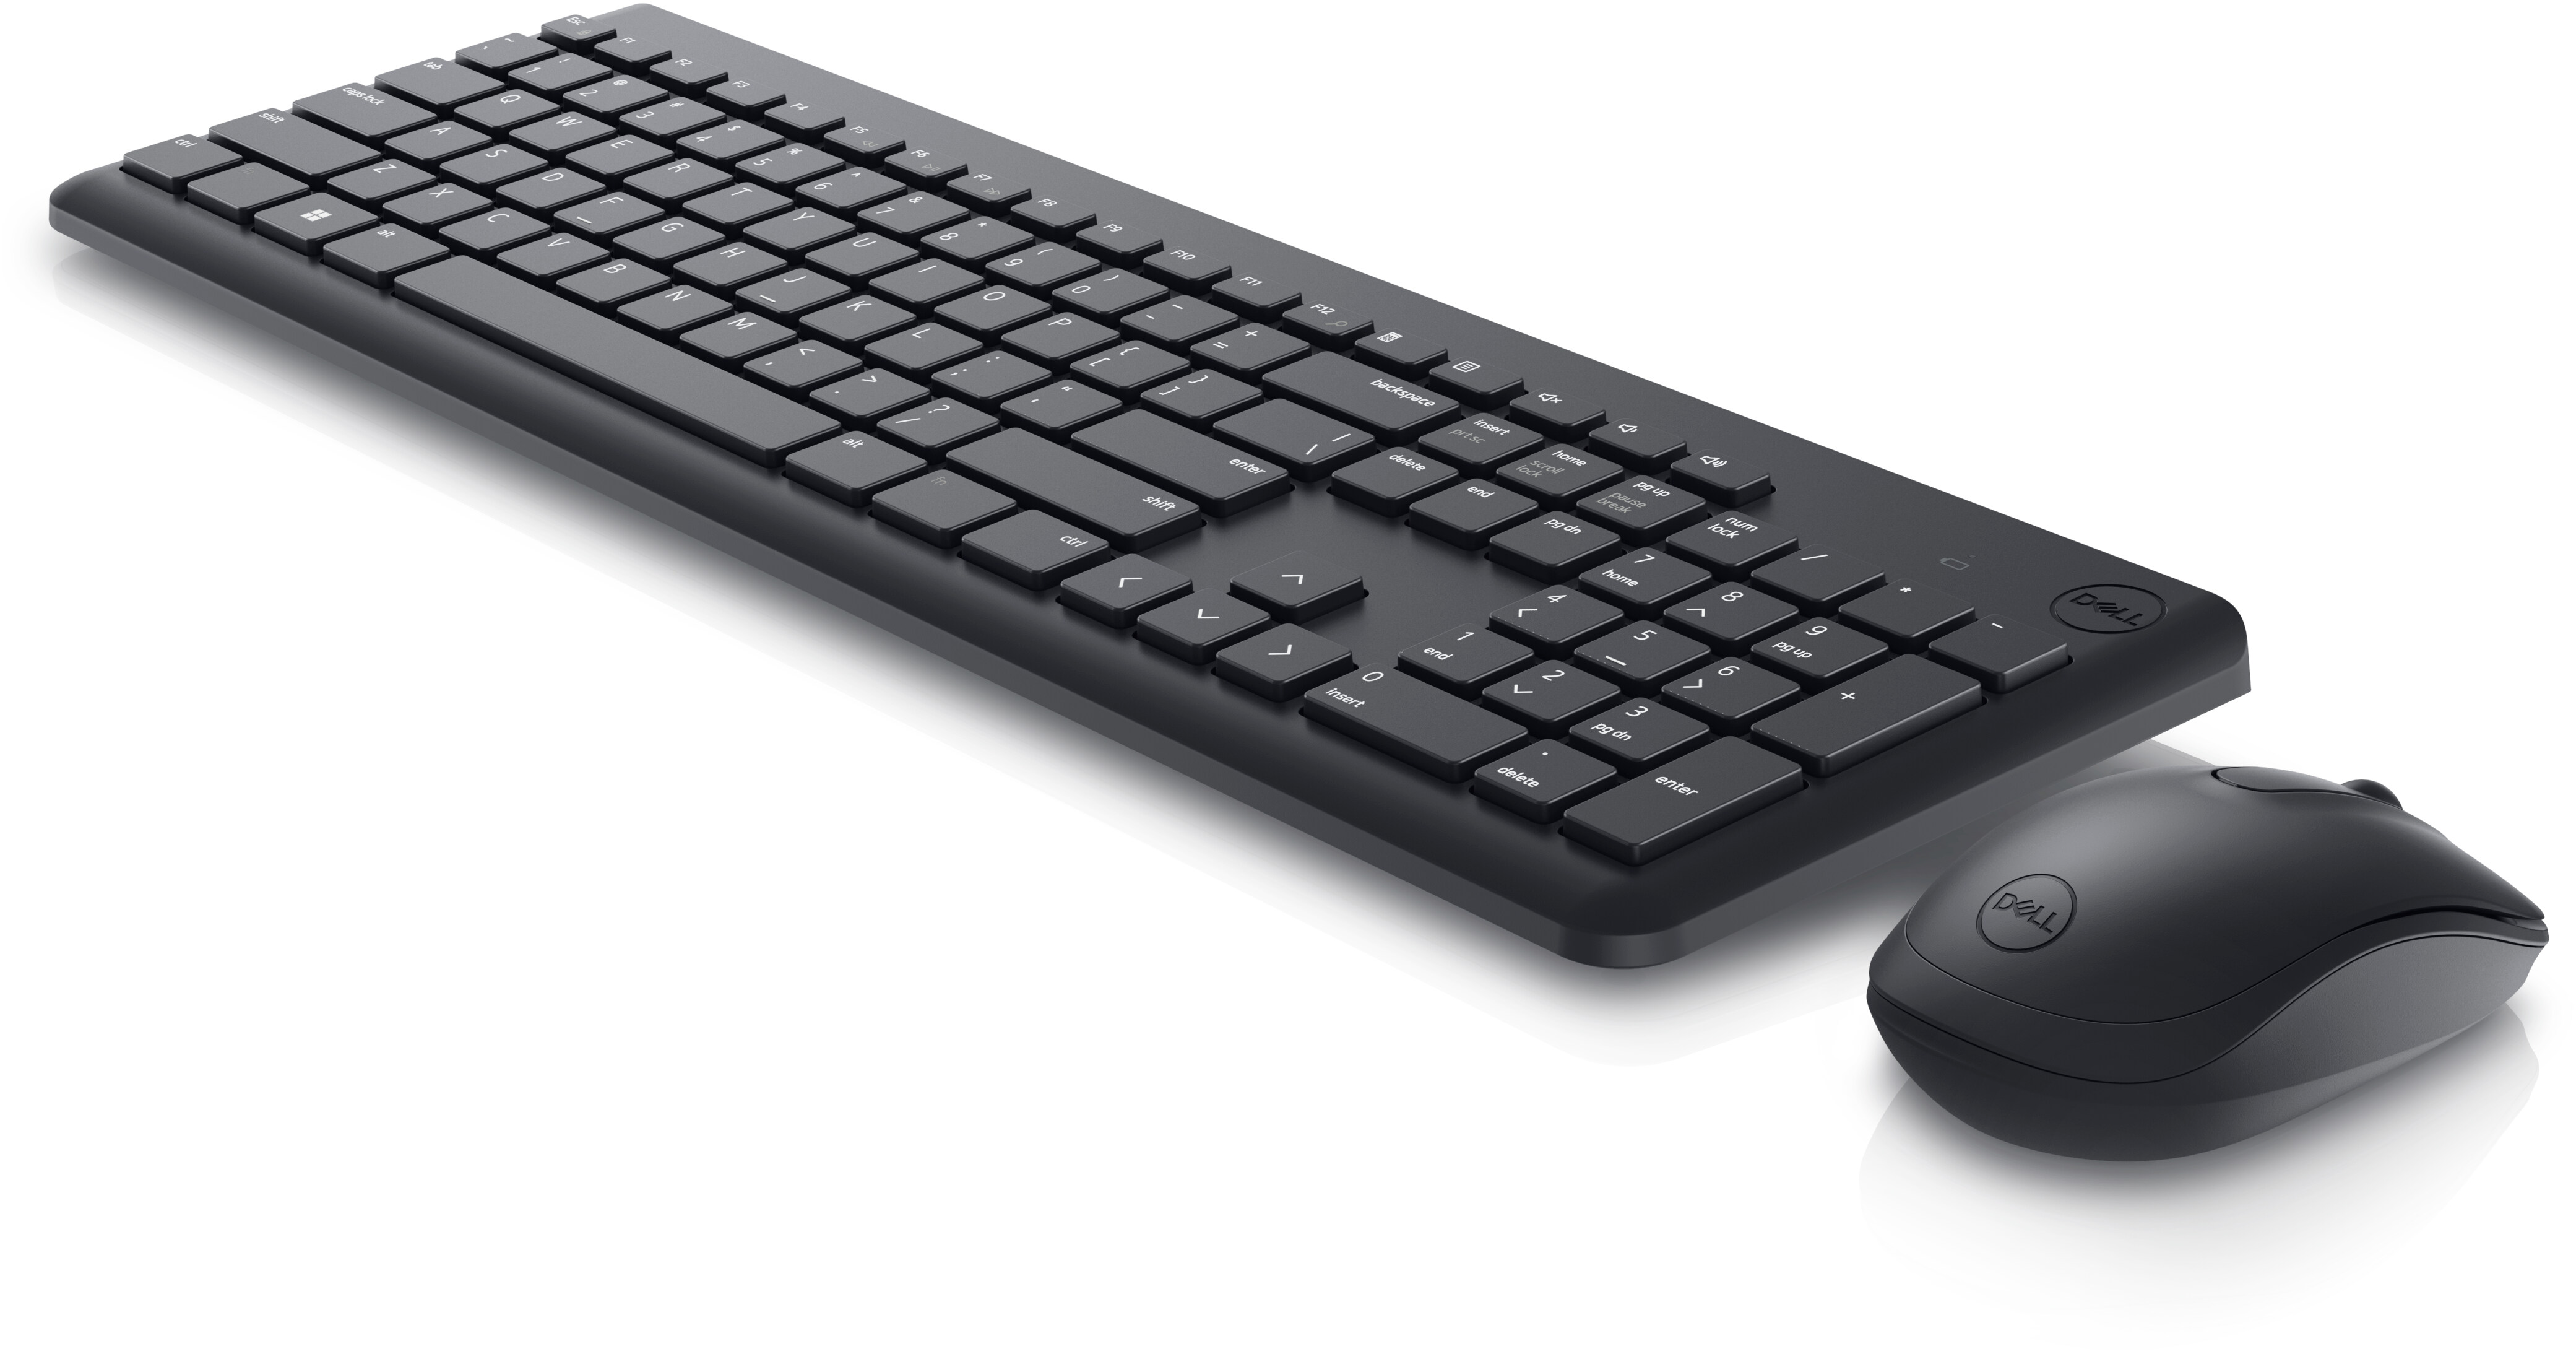 Teclado Microsoft Keyboard & Mouse Desktop 600 Spanish Black